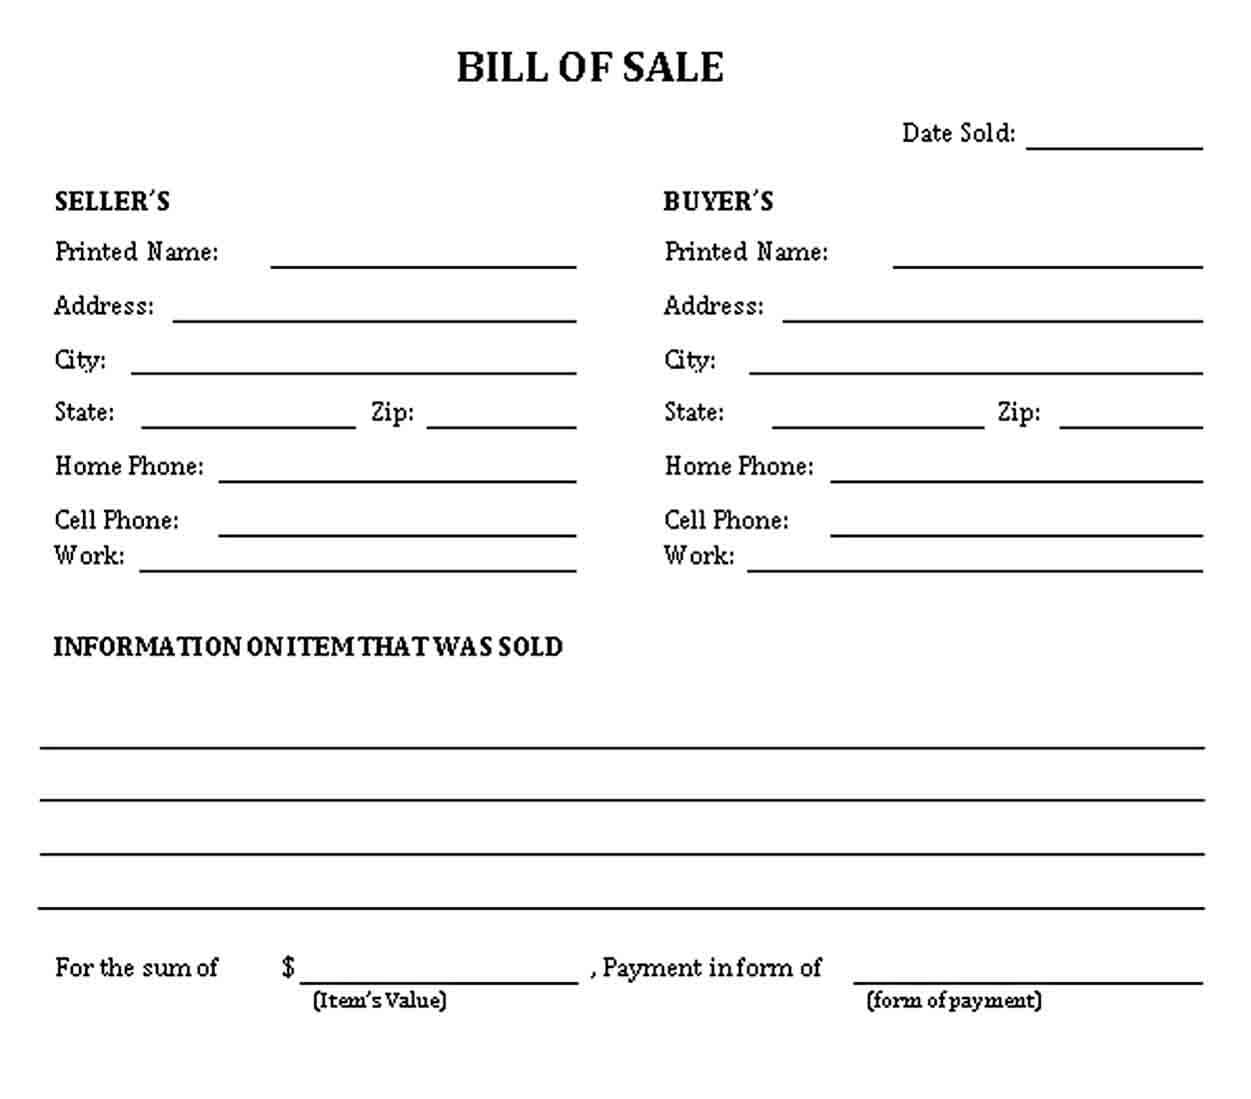 general bill of sale form